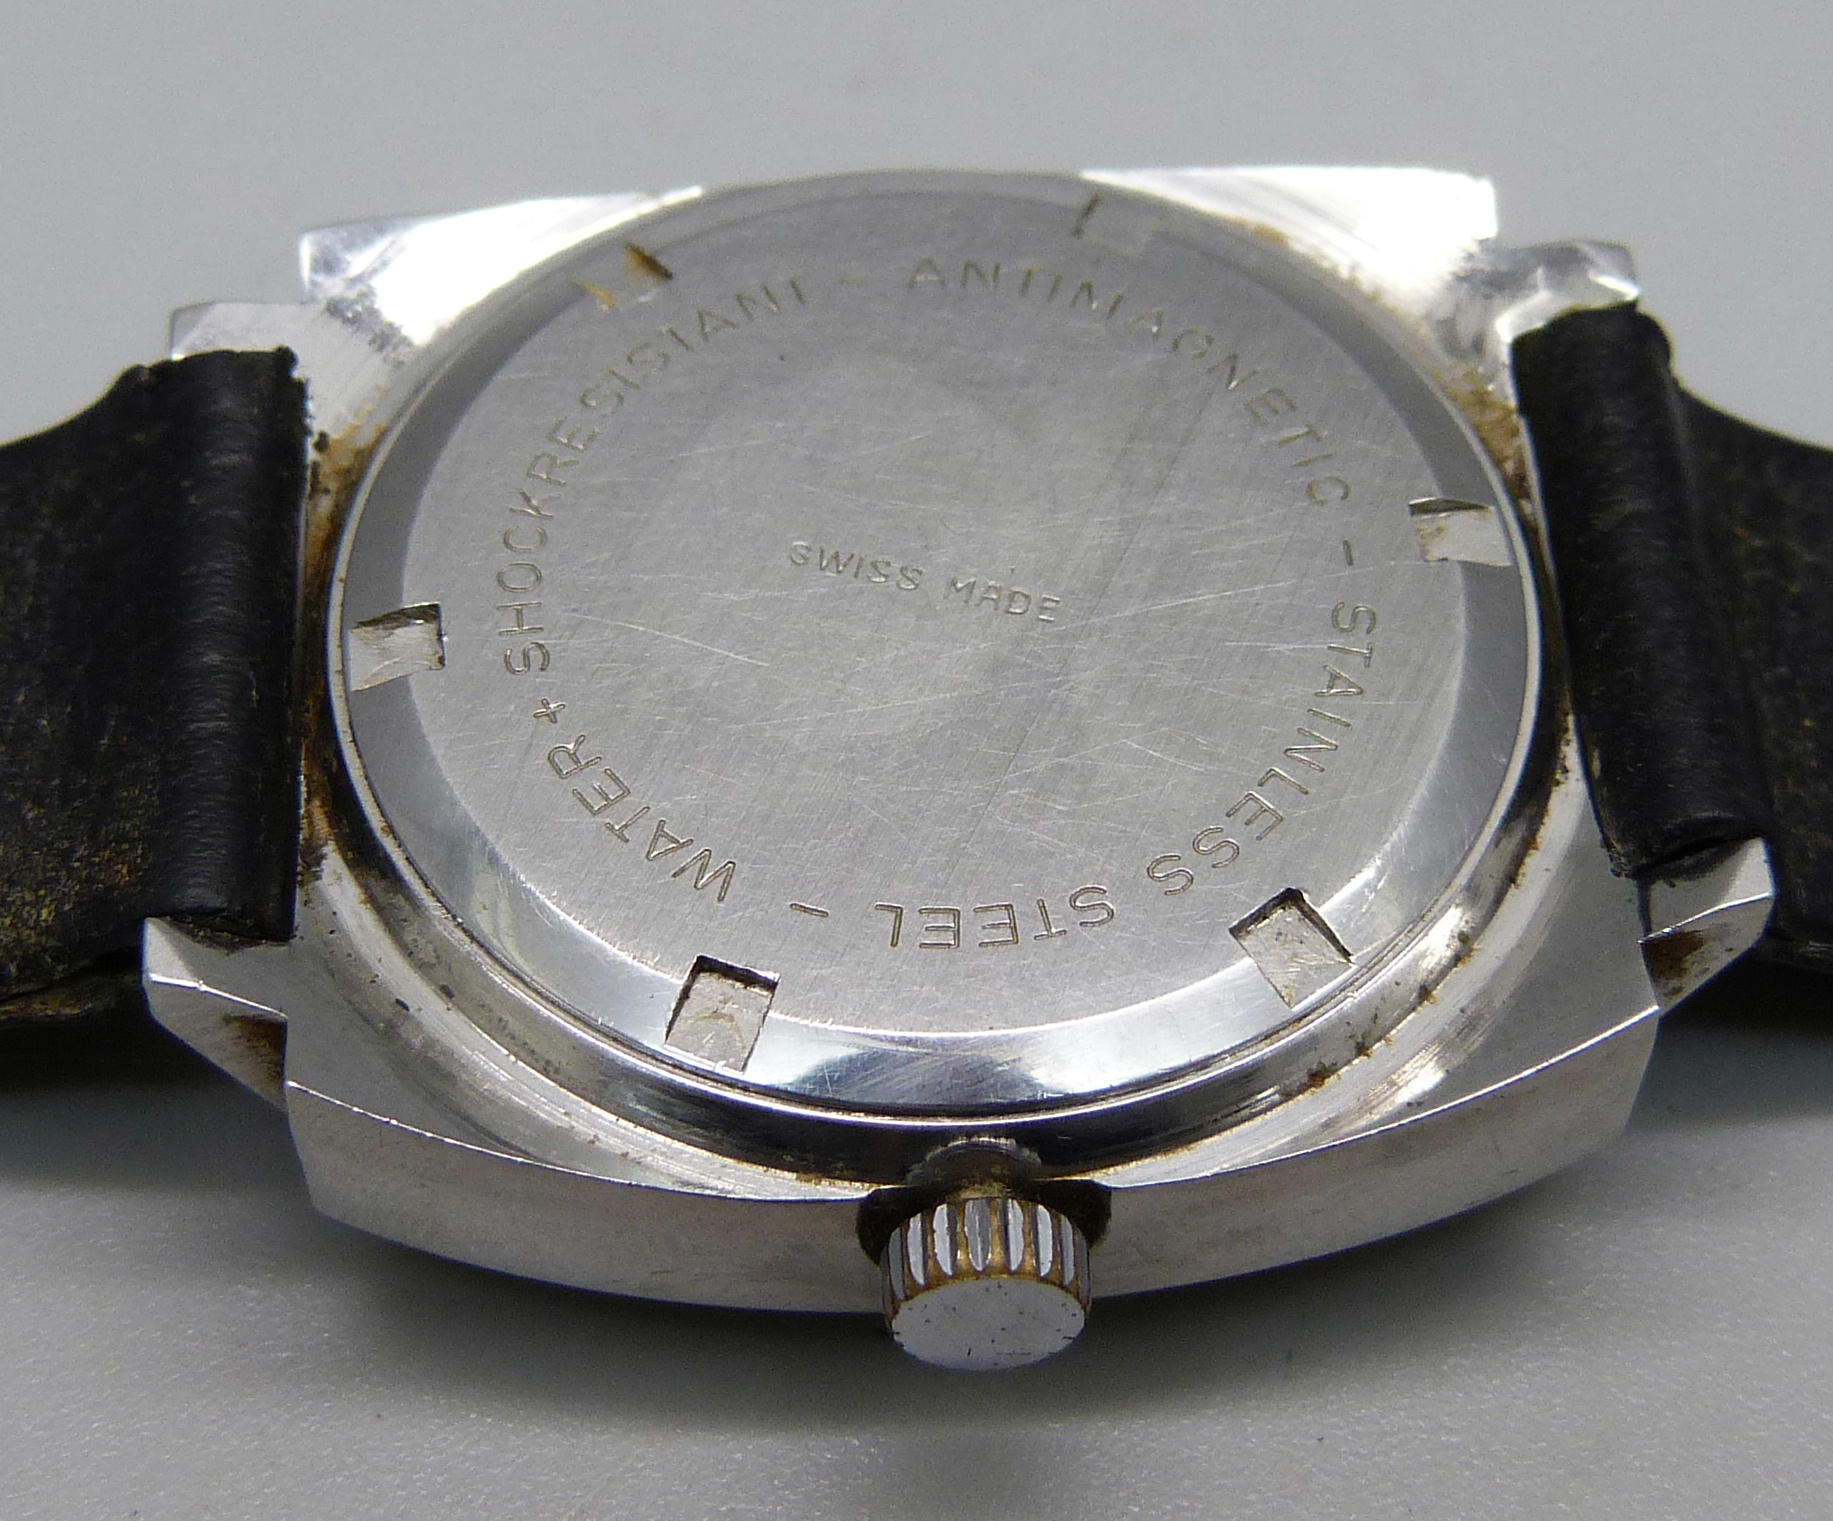 A 1970's Baylor Norseman, Swiss made, 17 jewel movement wristwatch - Image 5 of 7